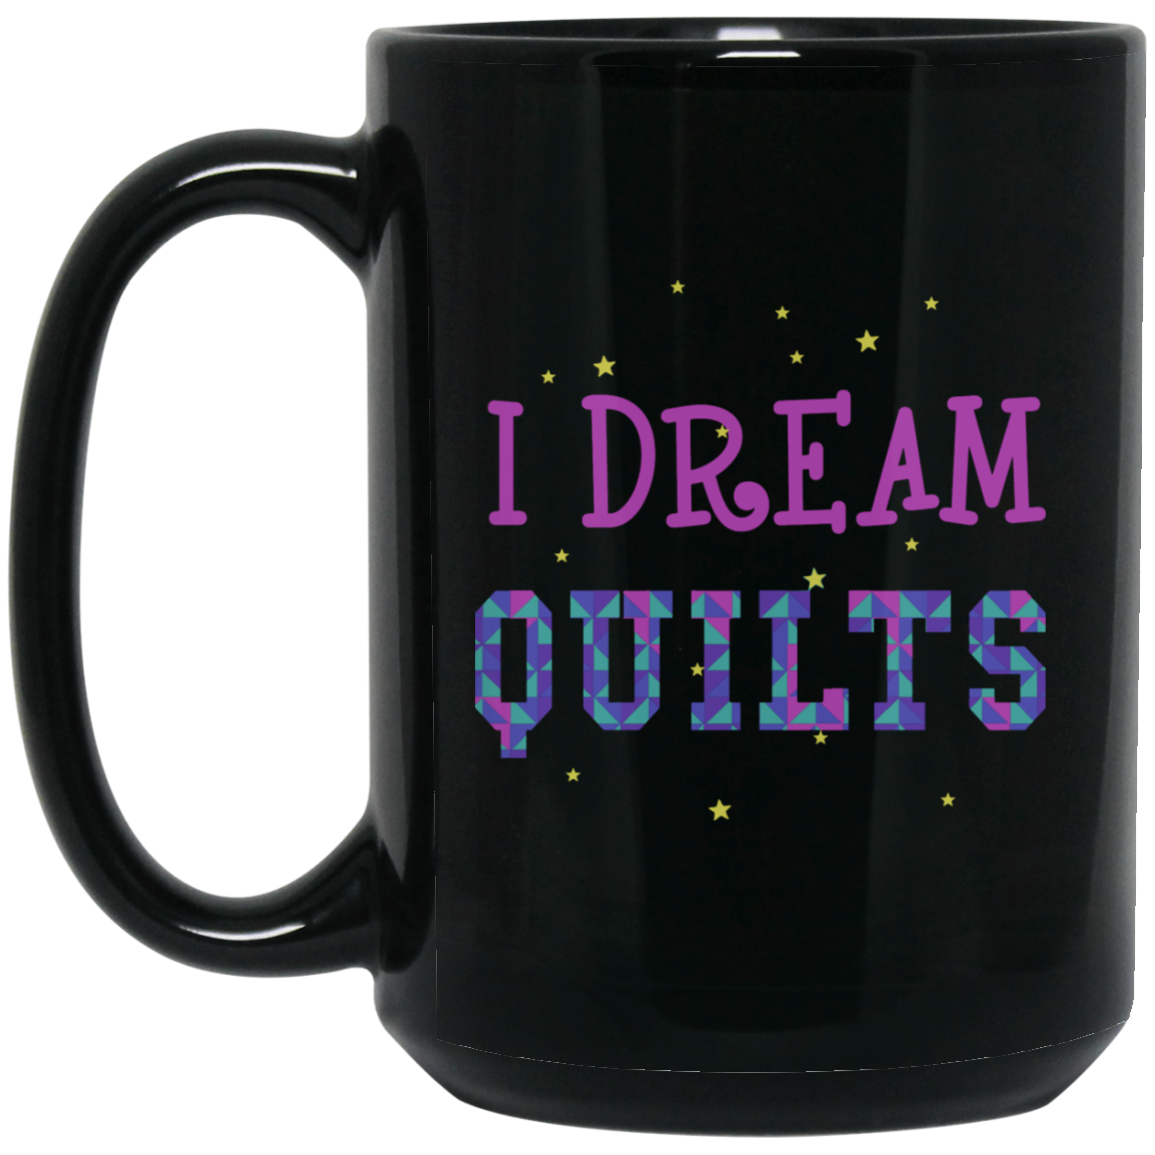 I Dream Quilts Black Mugs